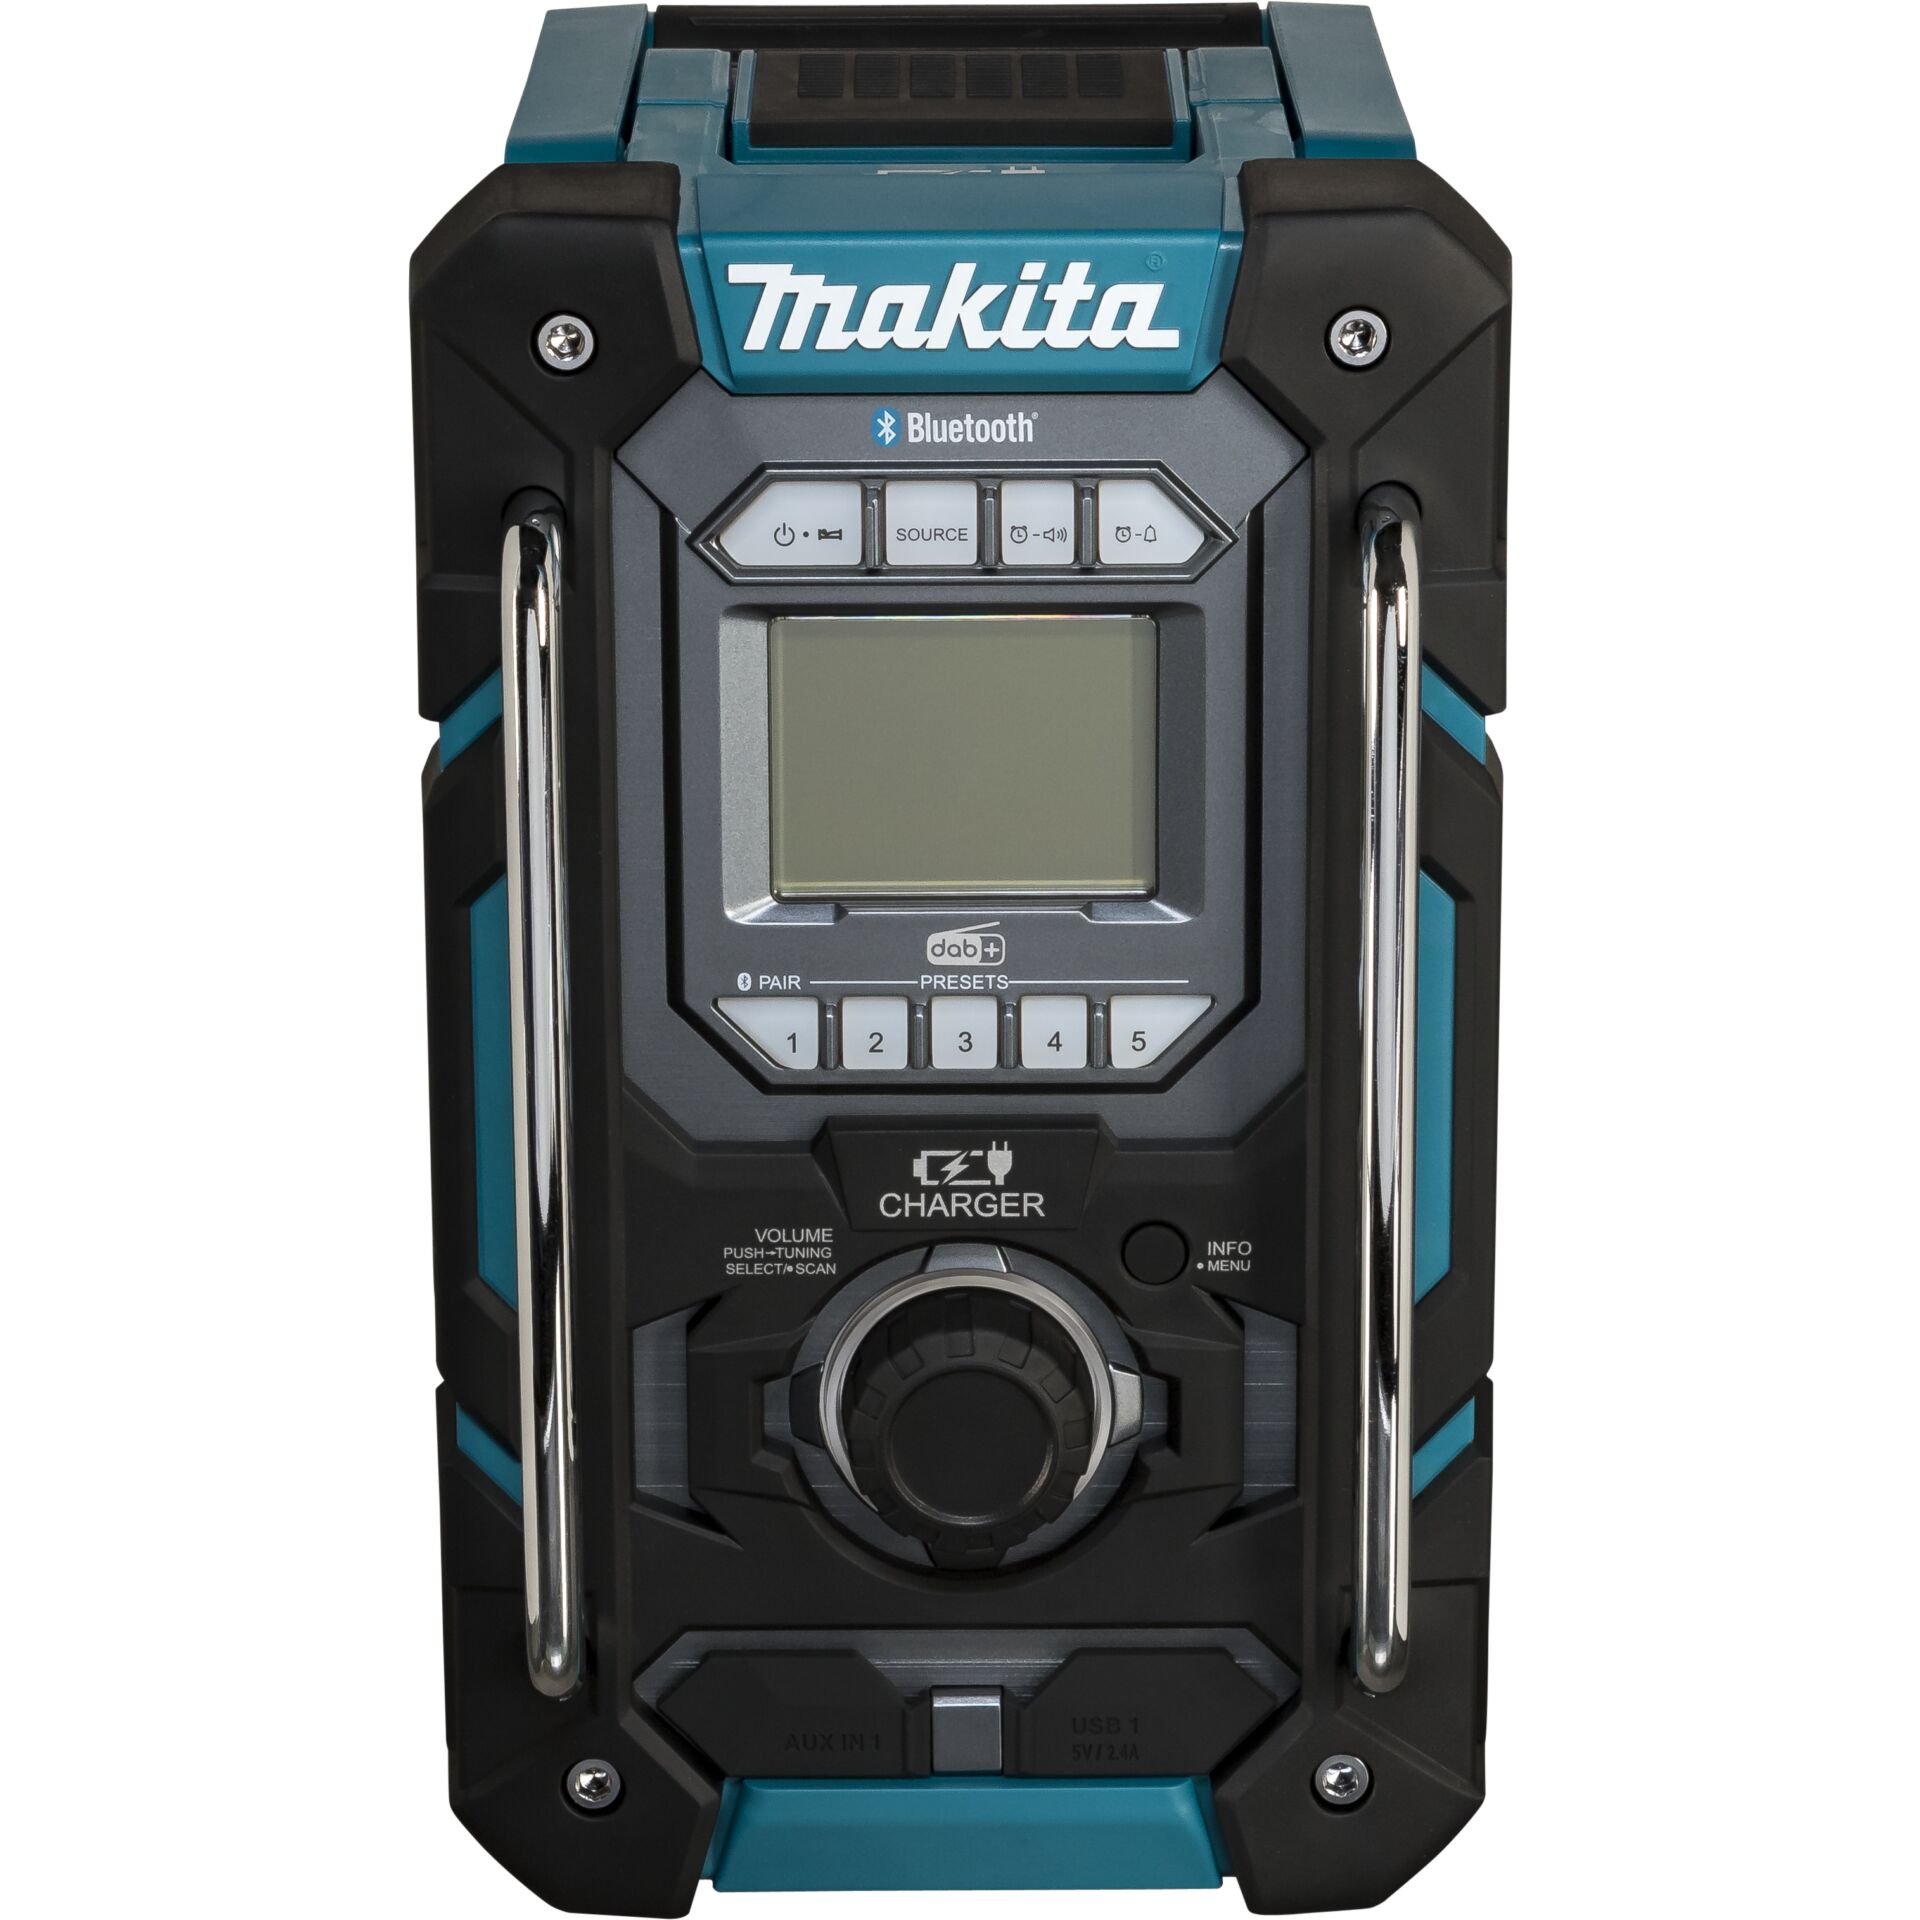 Makita DMR 301 radio da cantiere